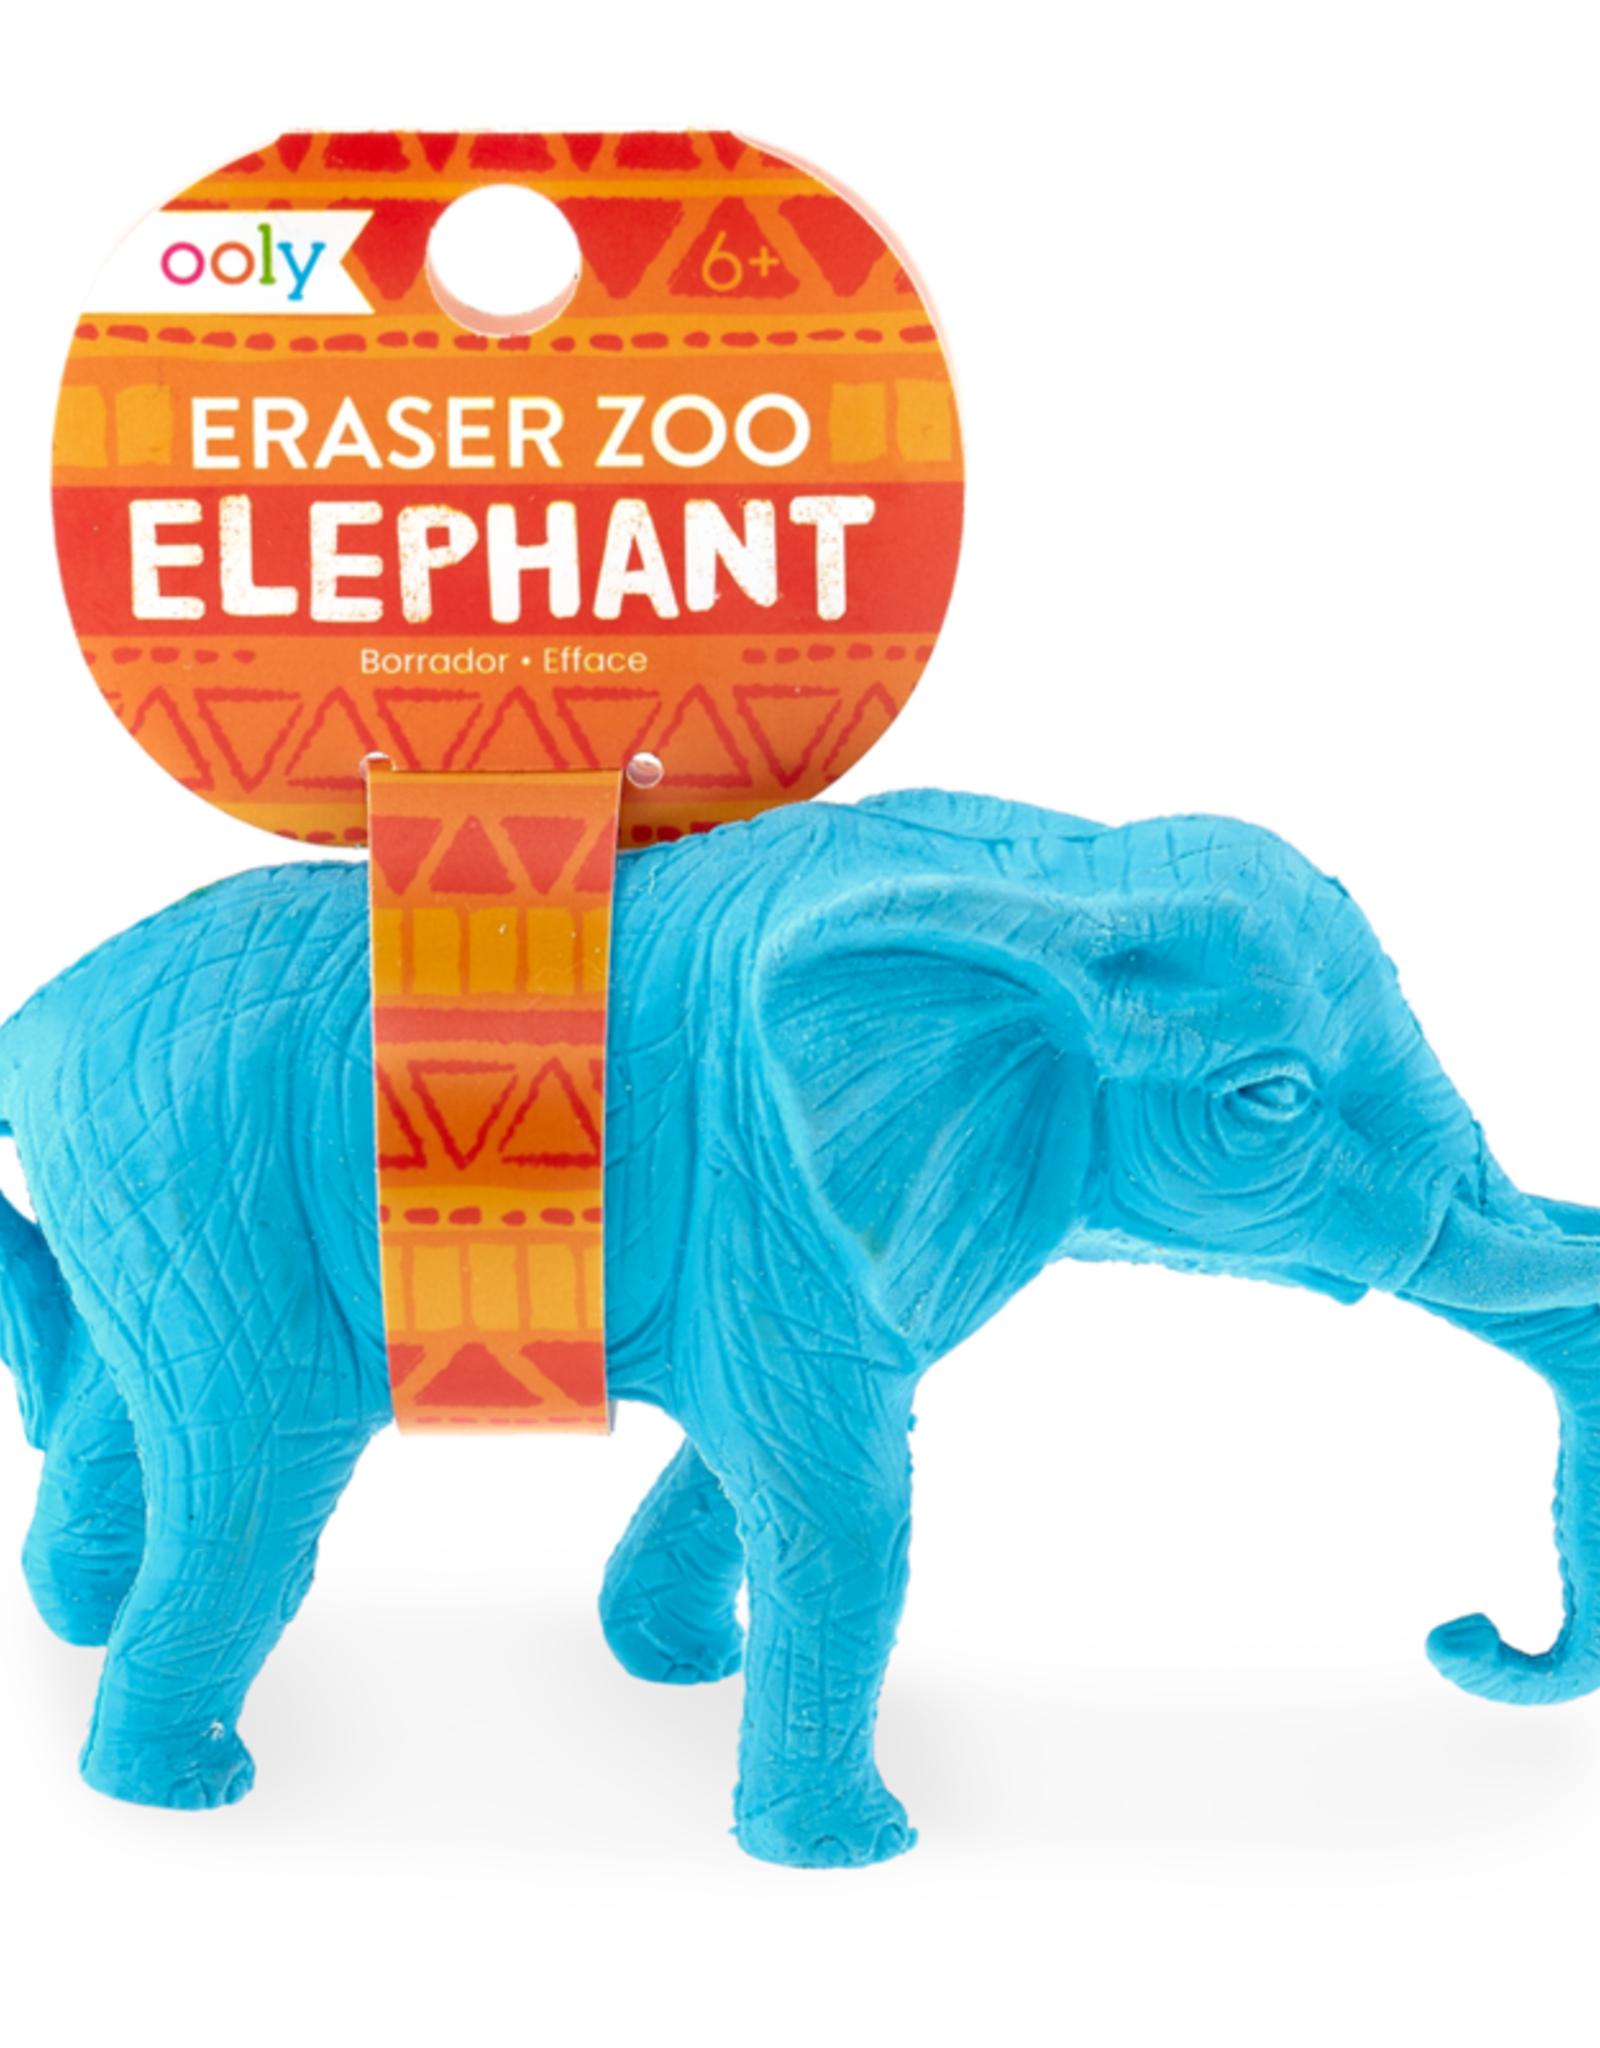 Ooly Eraser Zoo